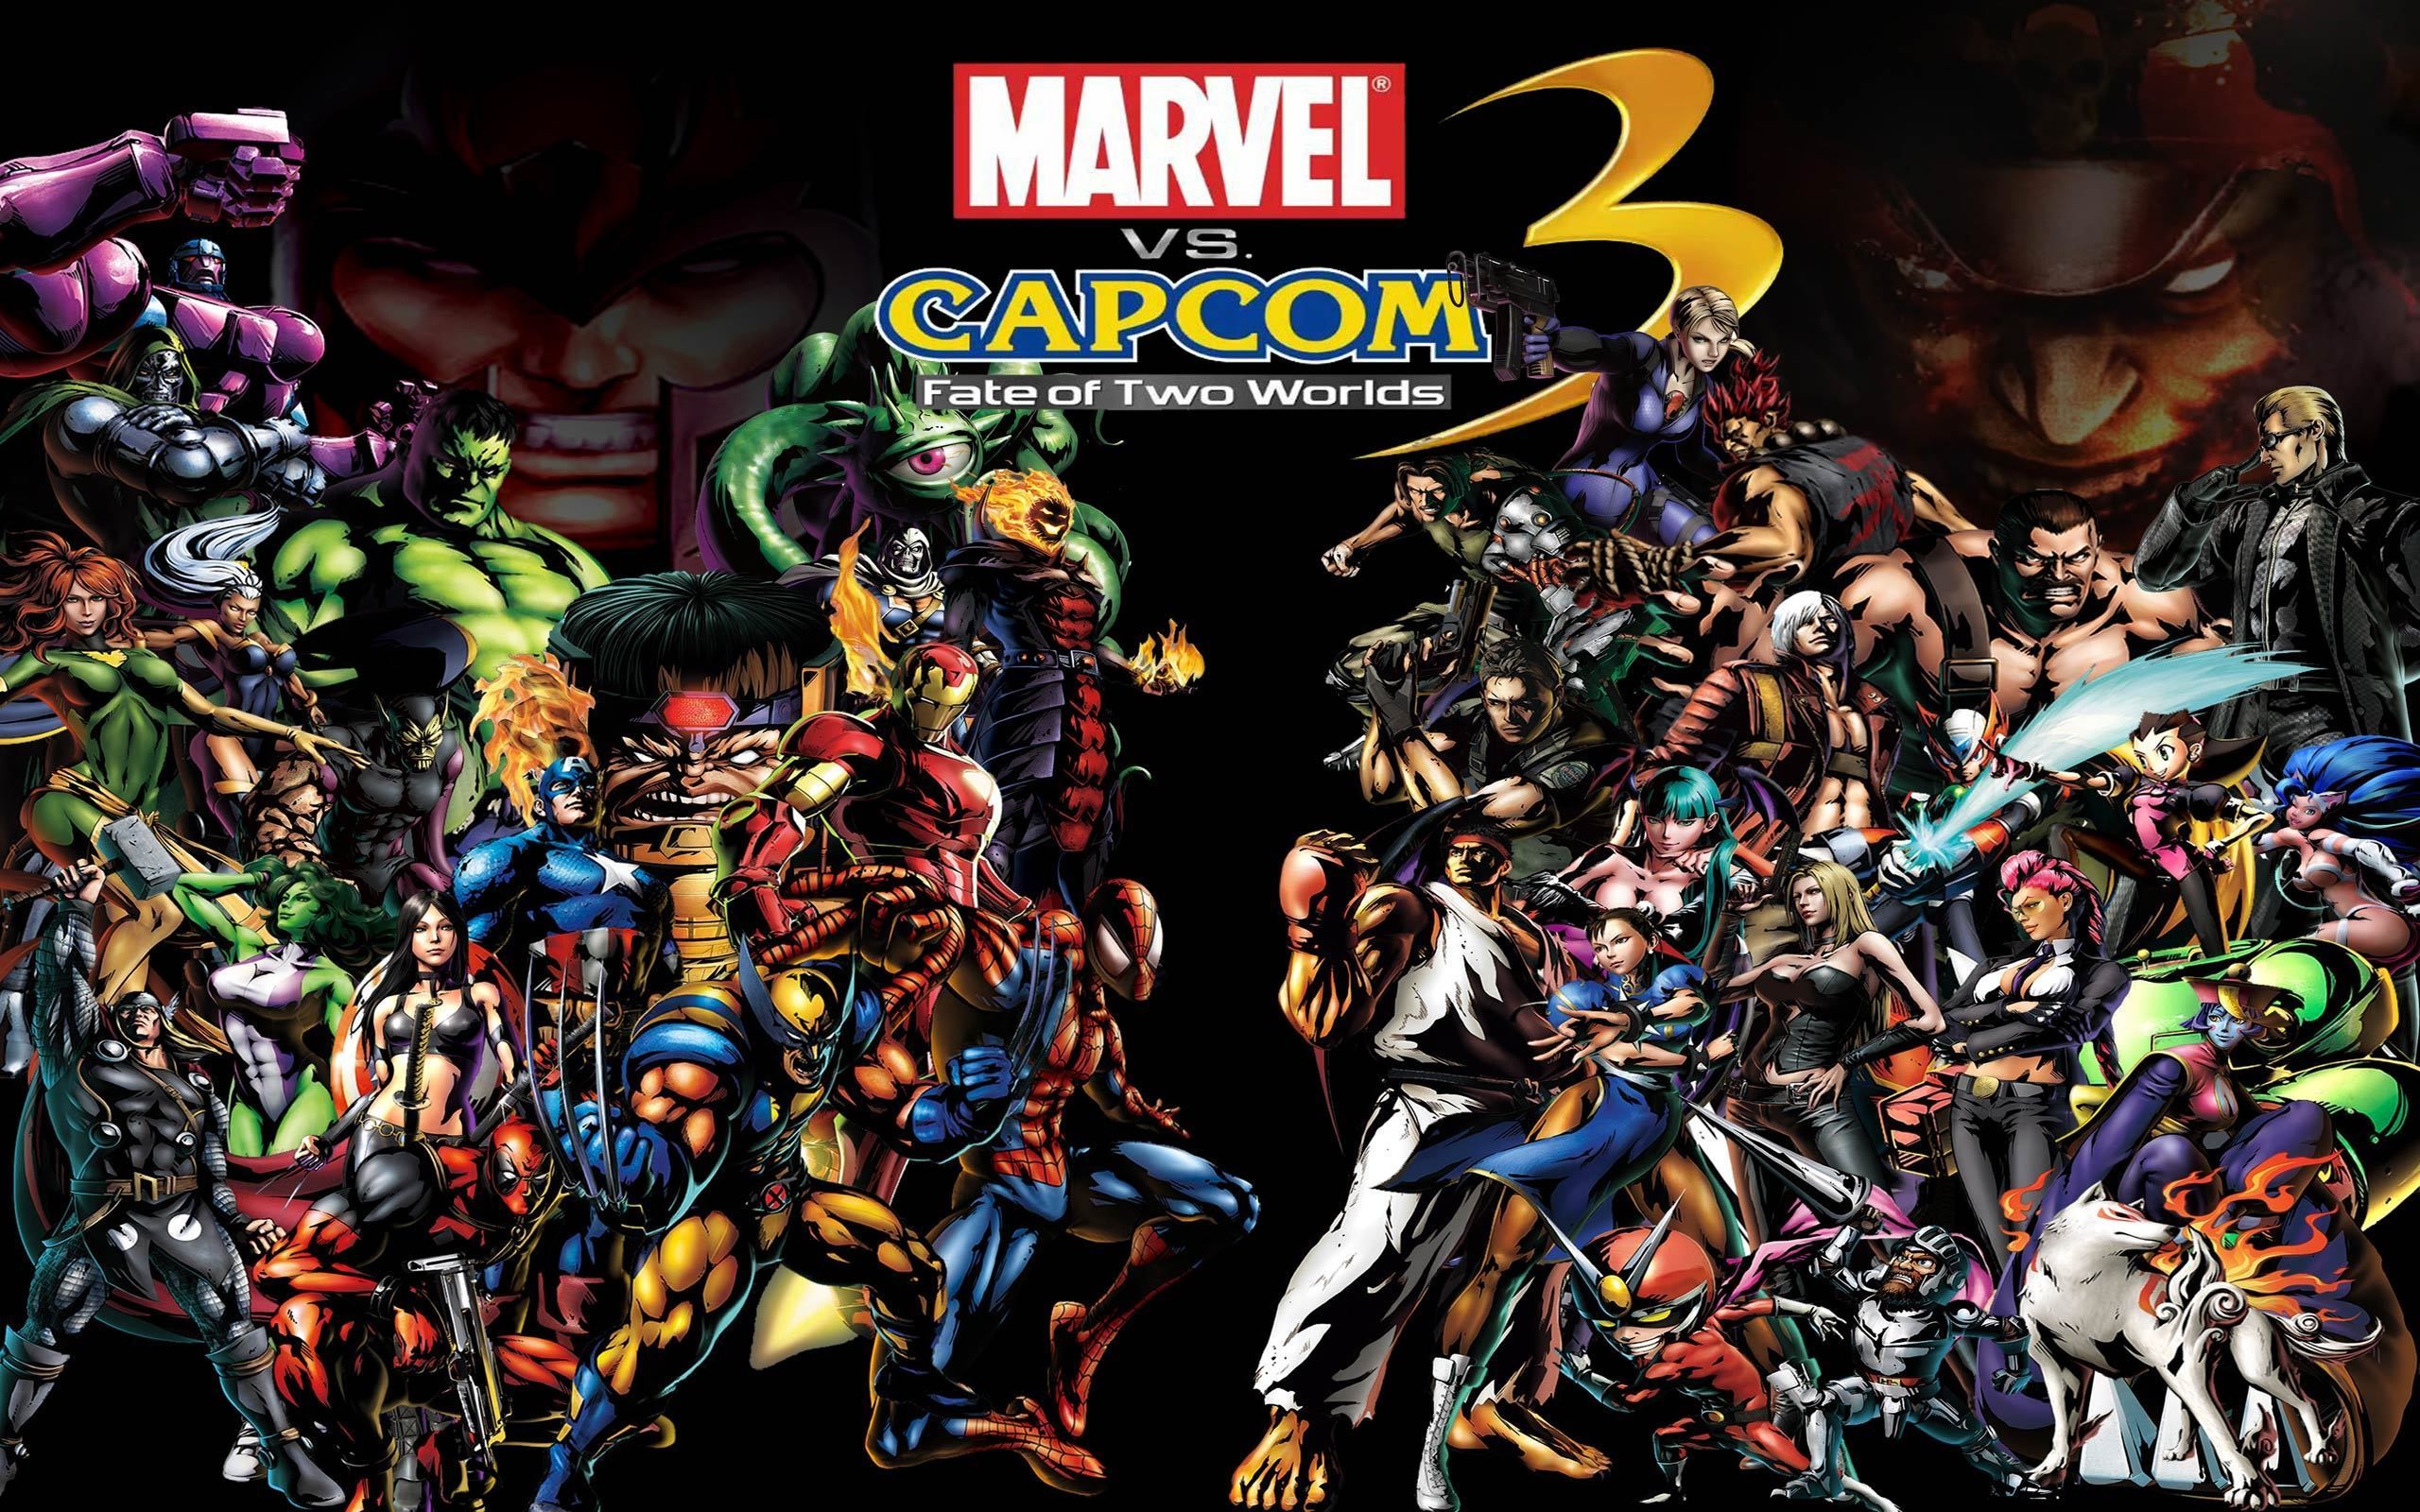 2560x1600 Marvel vs Capcom images marvel vs capcom 3 HD wallpaper and background  photos